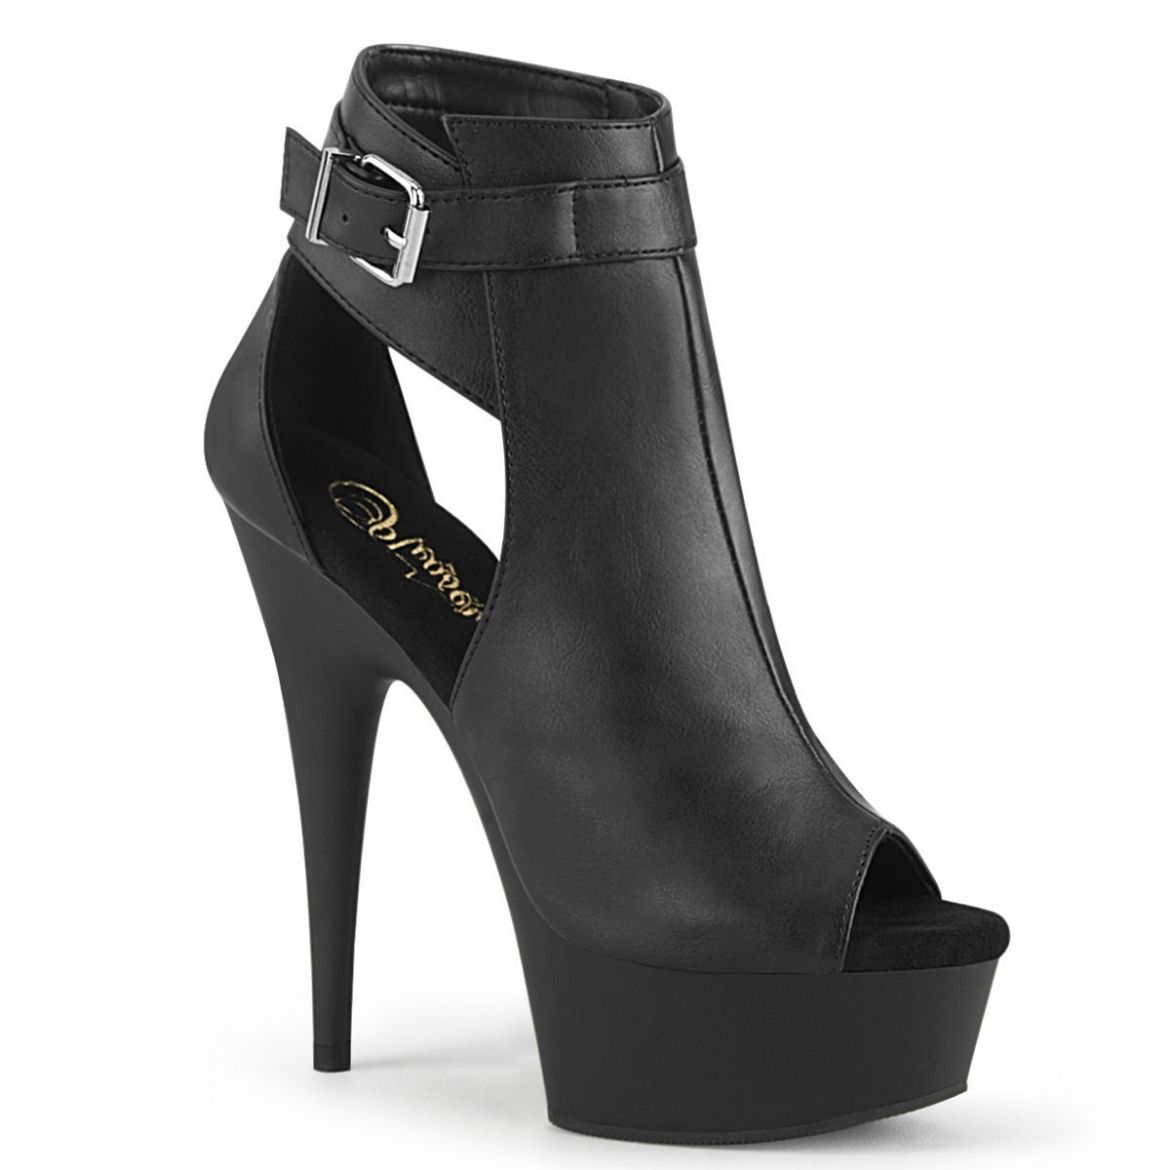 Product image of Pleaser DELIGHT-600-10 Black Faux Leather/Black Matte 6 inch (15.2 cm) Heel 2 3/4 inch (4.5 cm) Platform Peep Toe Ankle Bootie Sandal